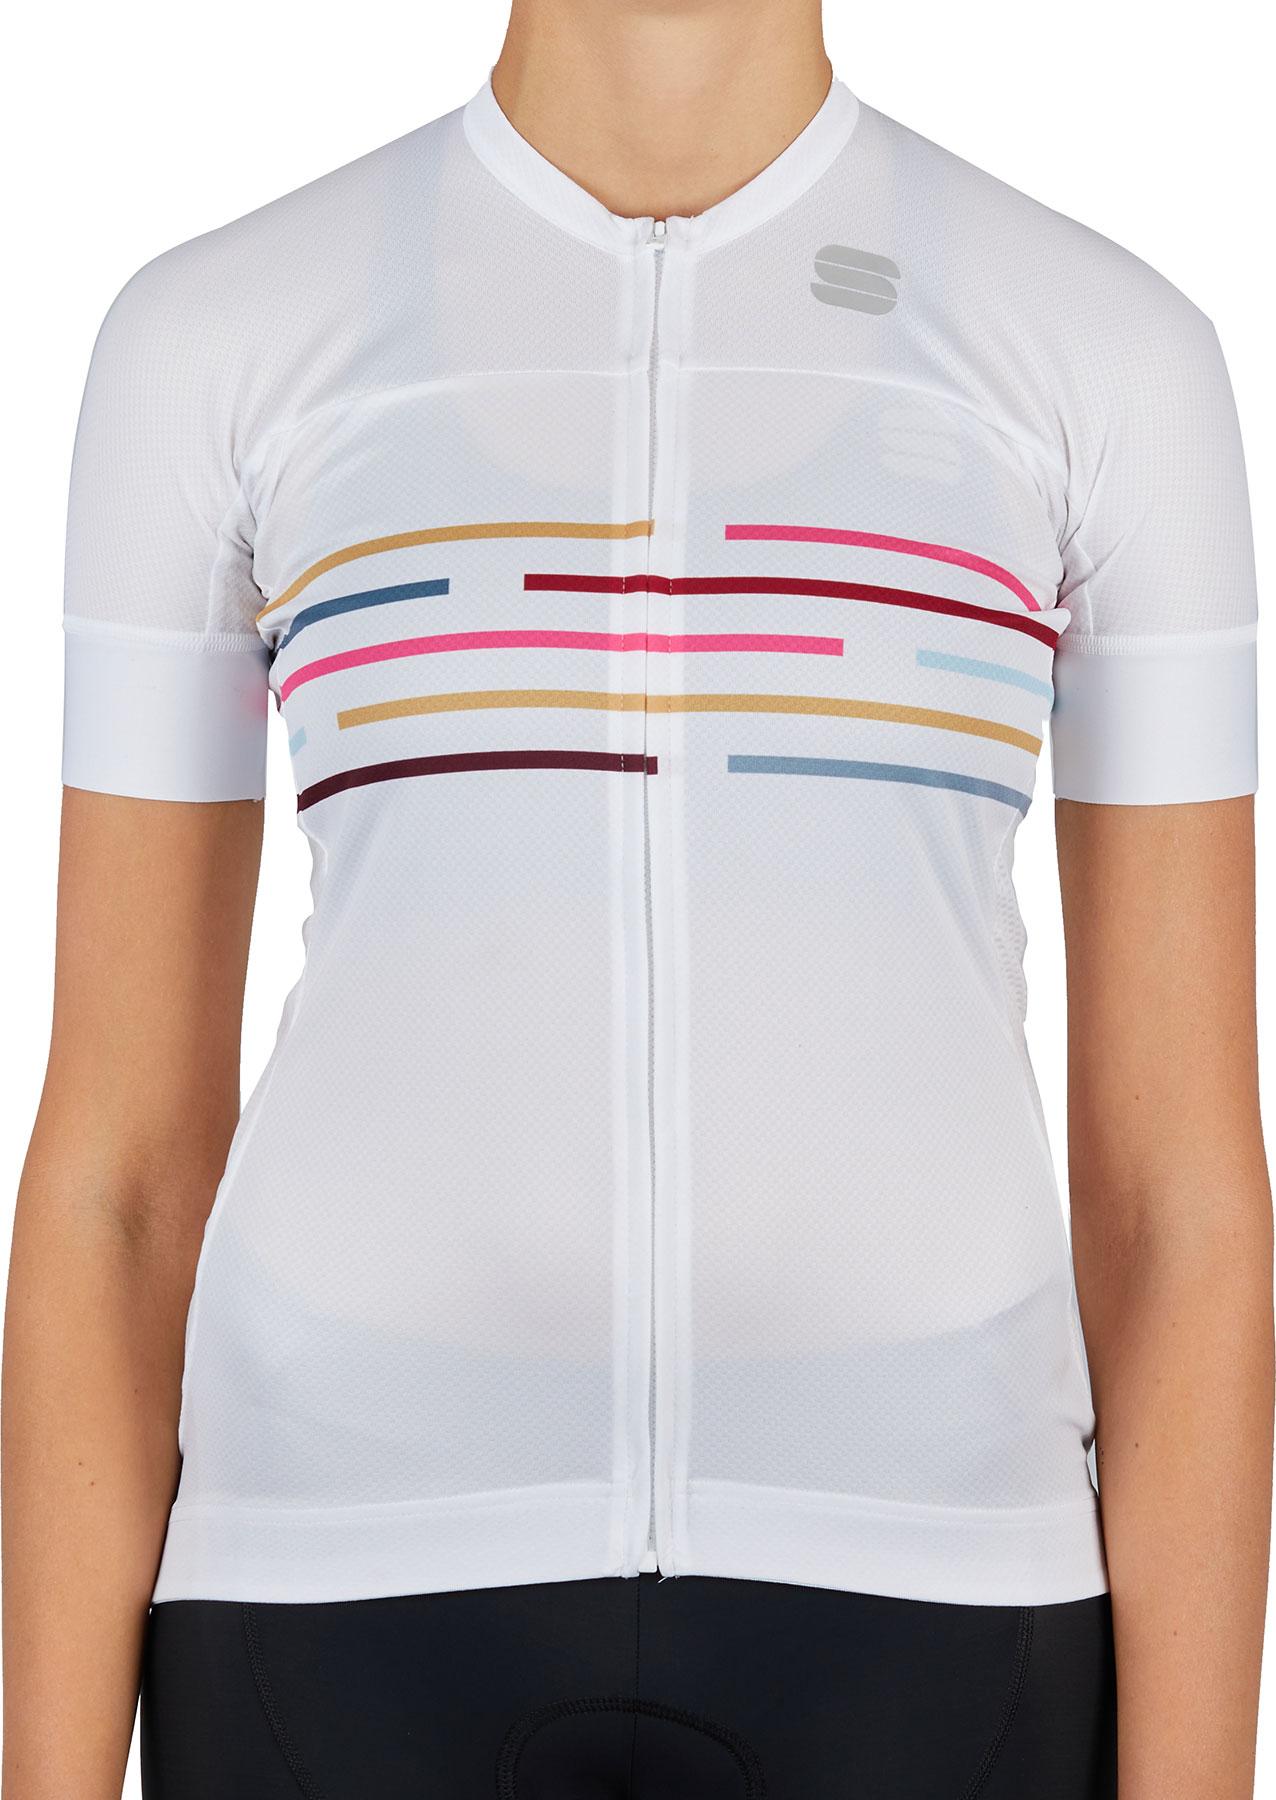 sportful women's velodrome cycling jersey